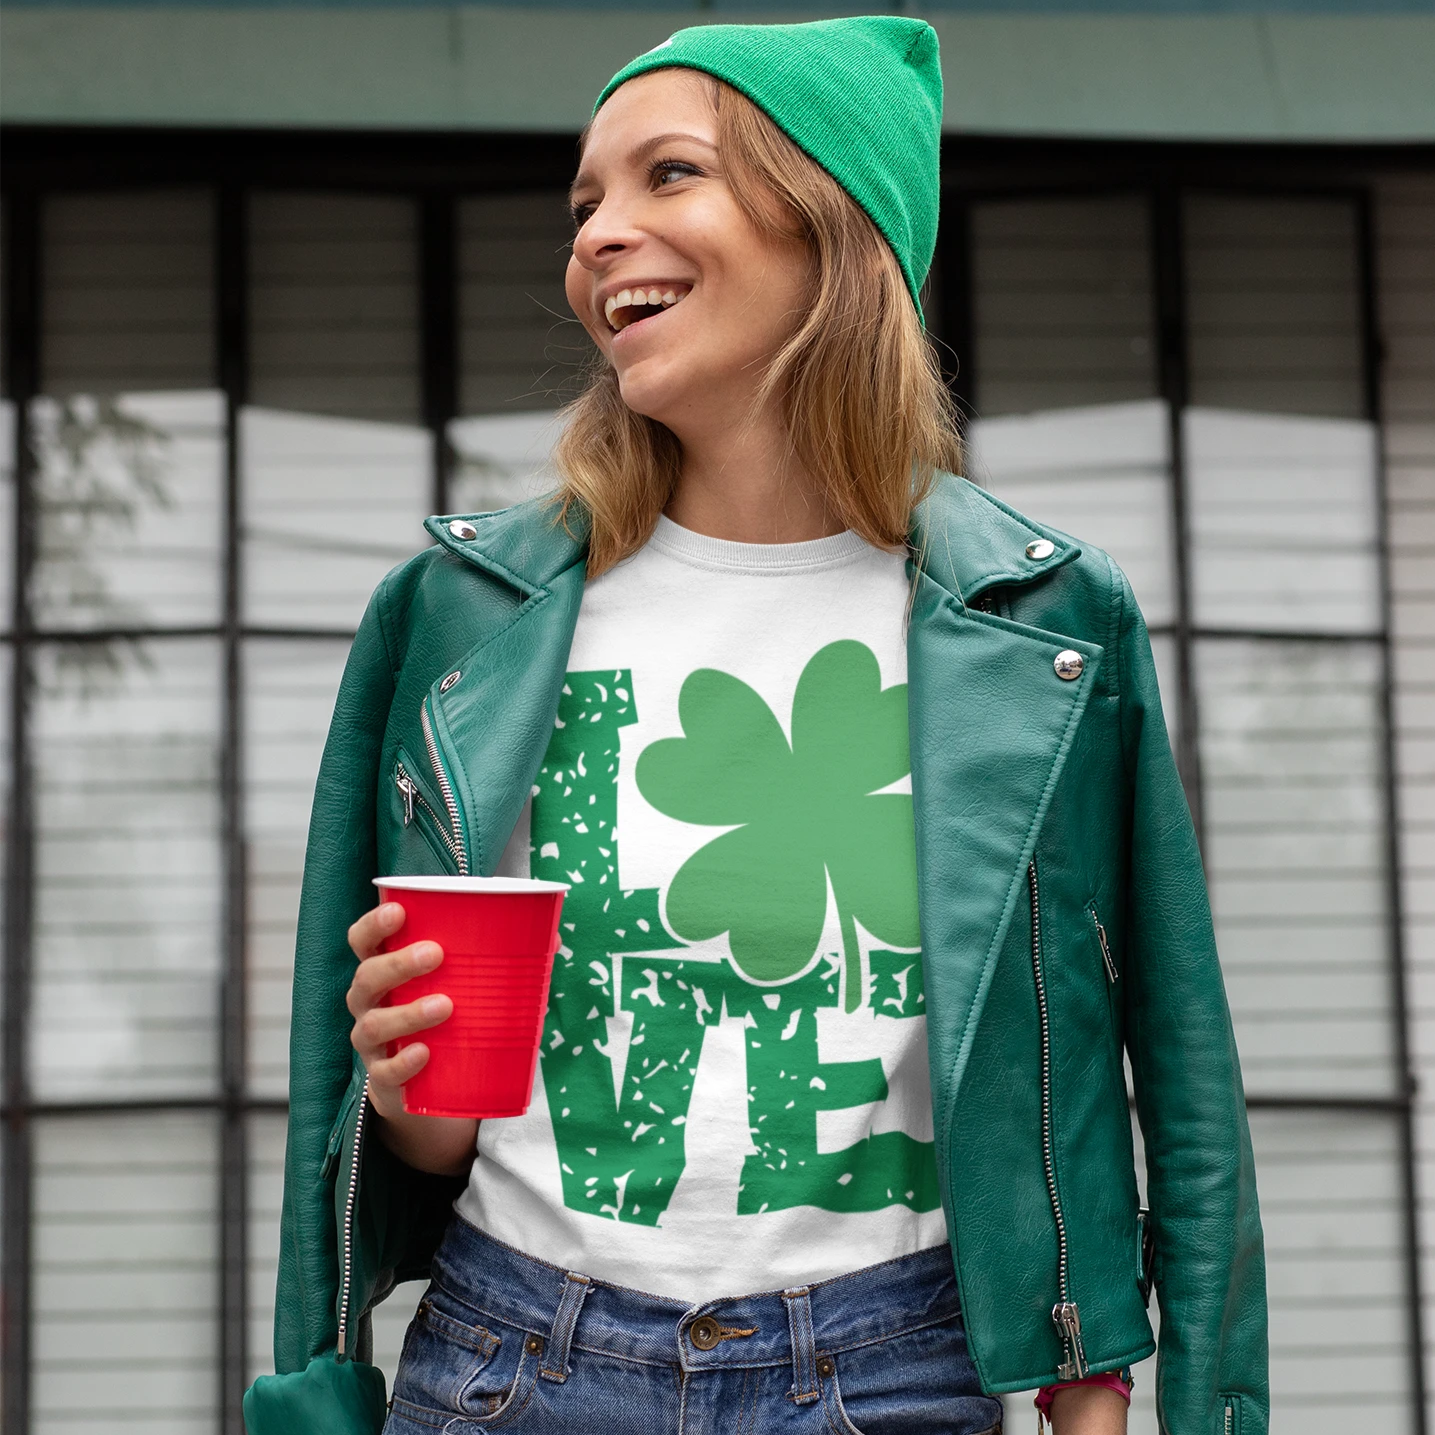 St. Patrick's Day Love Clover Tshirt